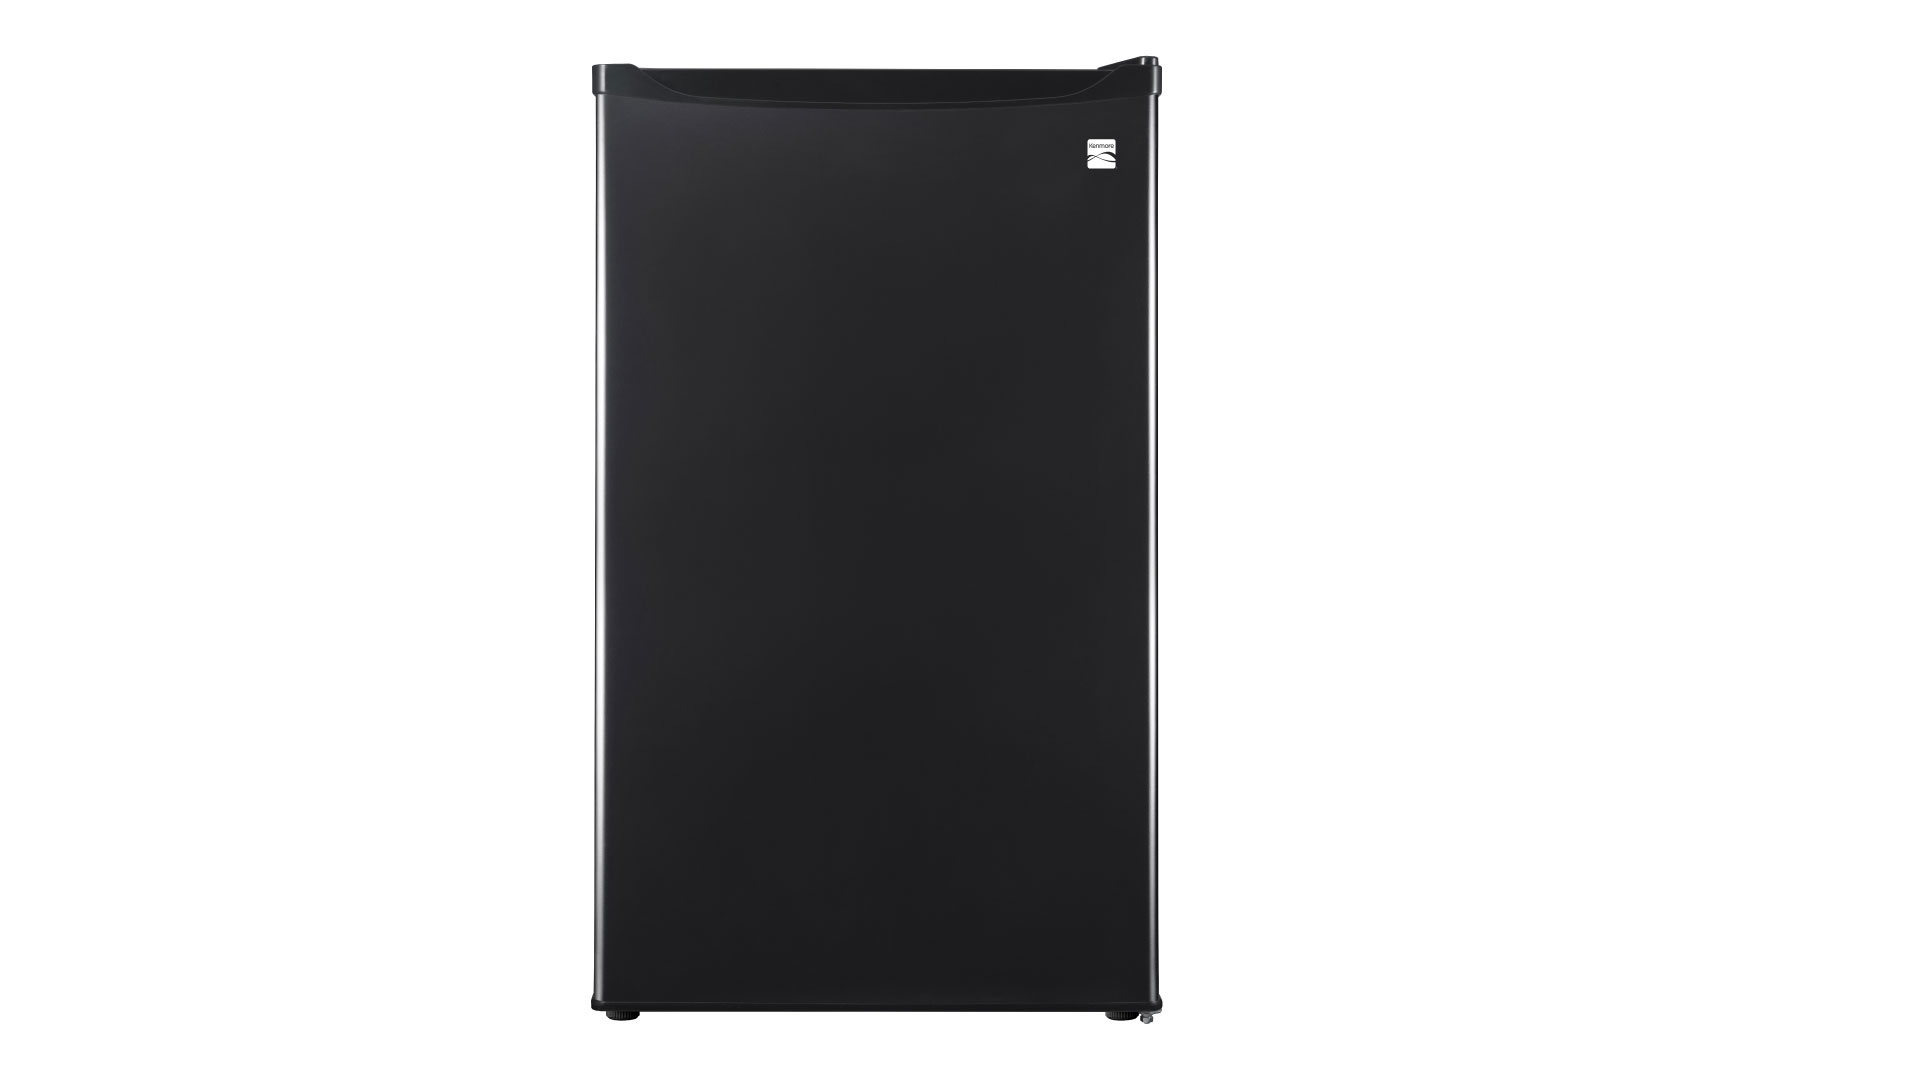 Kenmore 4.3 cubic foot fridge, black, front view.